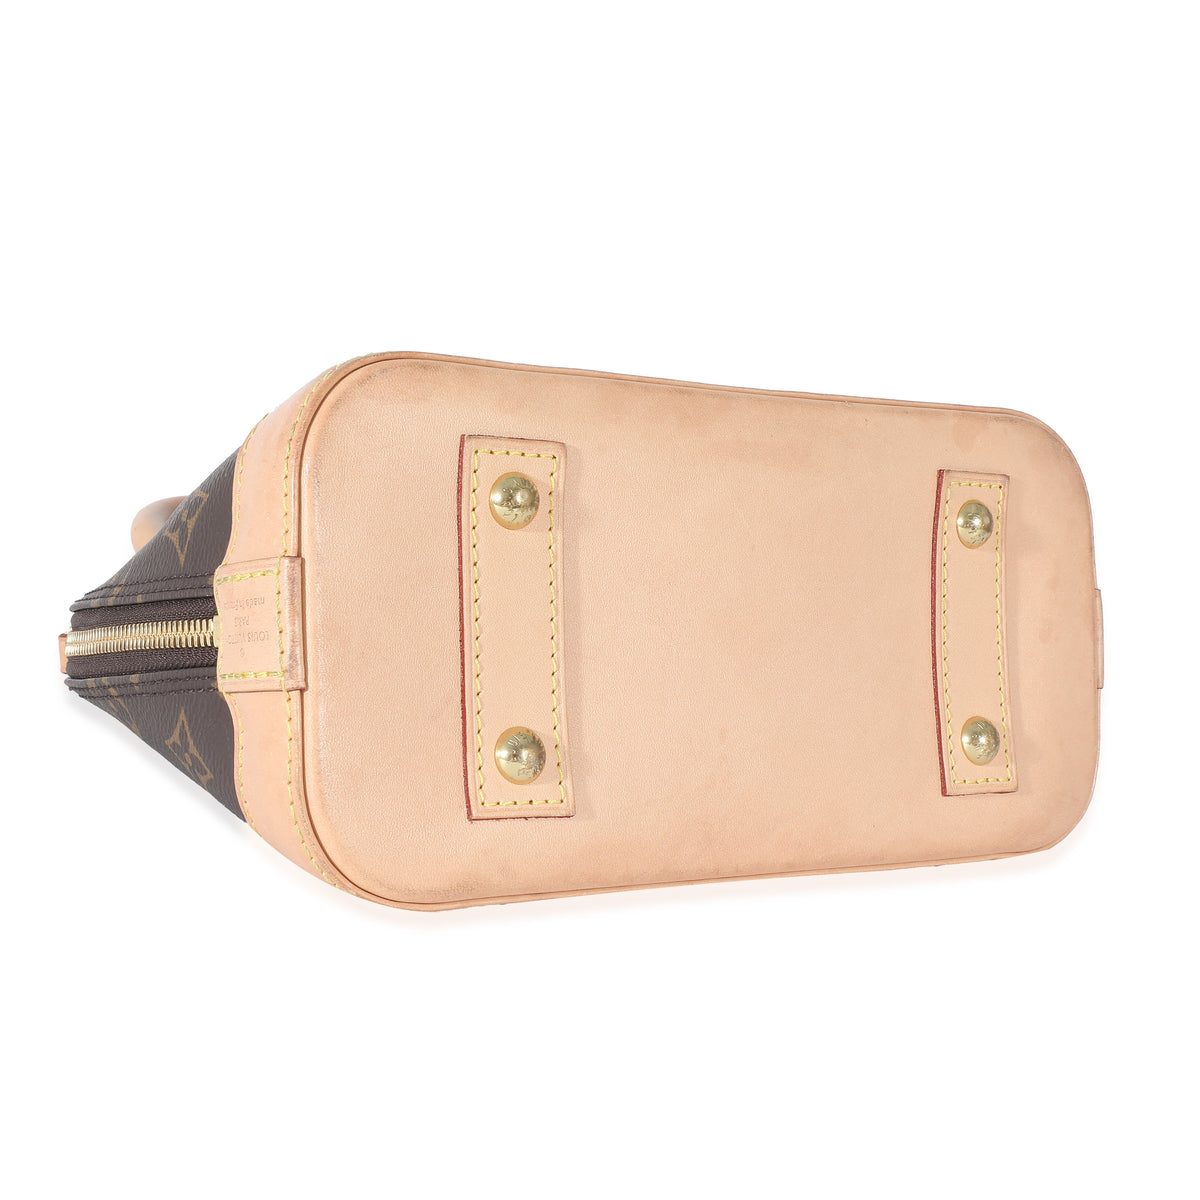 Louis Vuitton - Authenticated Alma Bb Handbag - Cloth Beige for Women, Very Good Condition